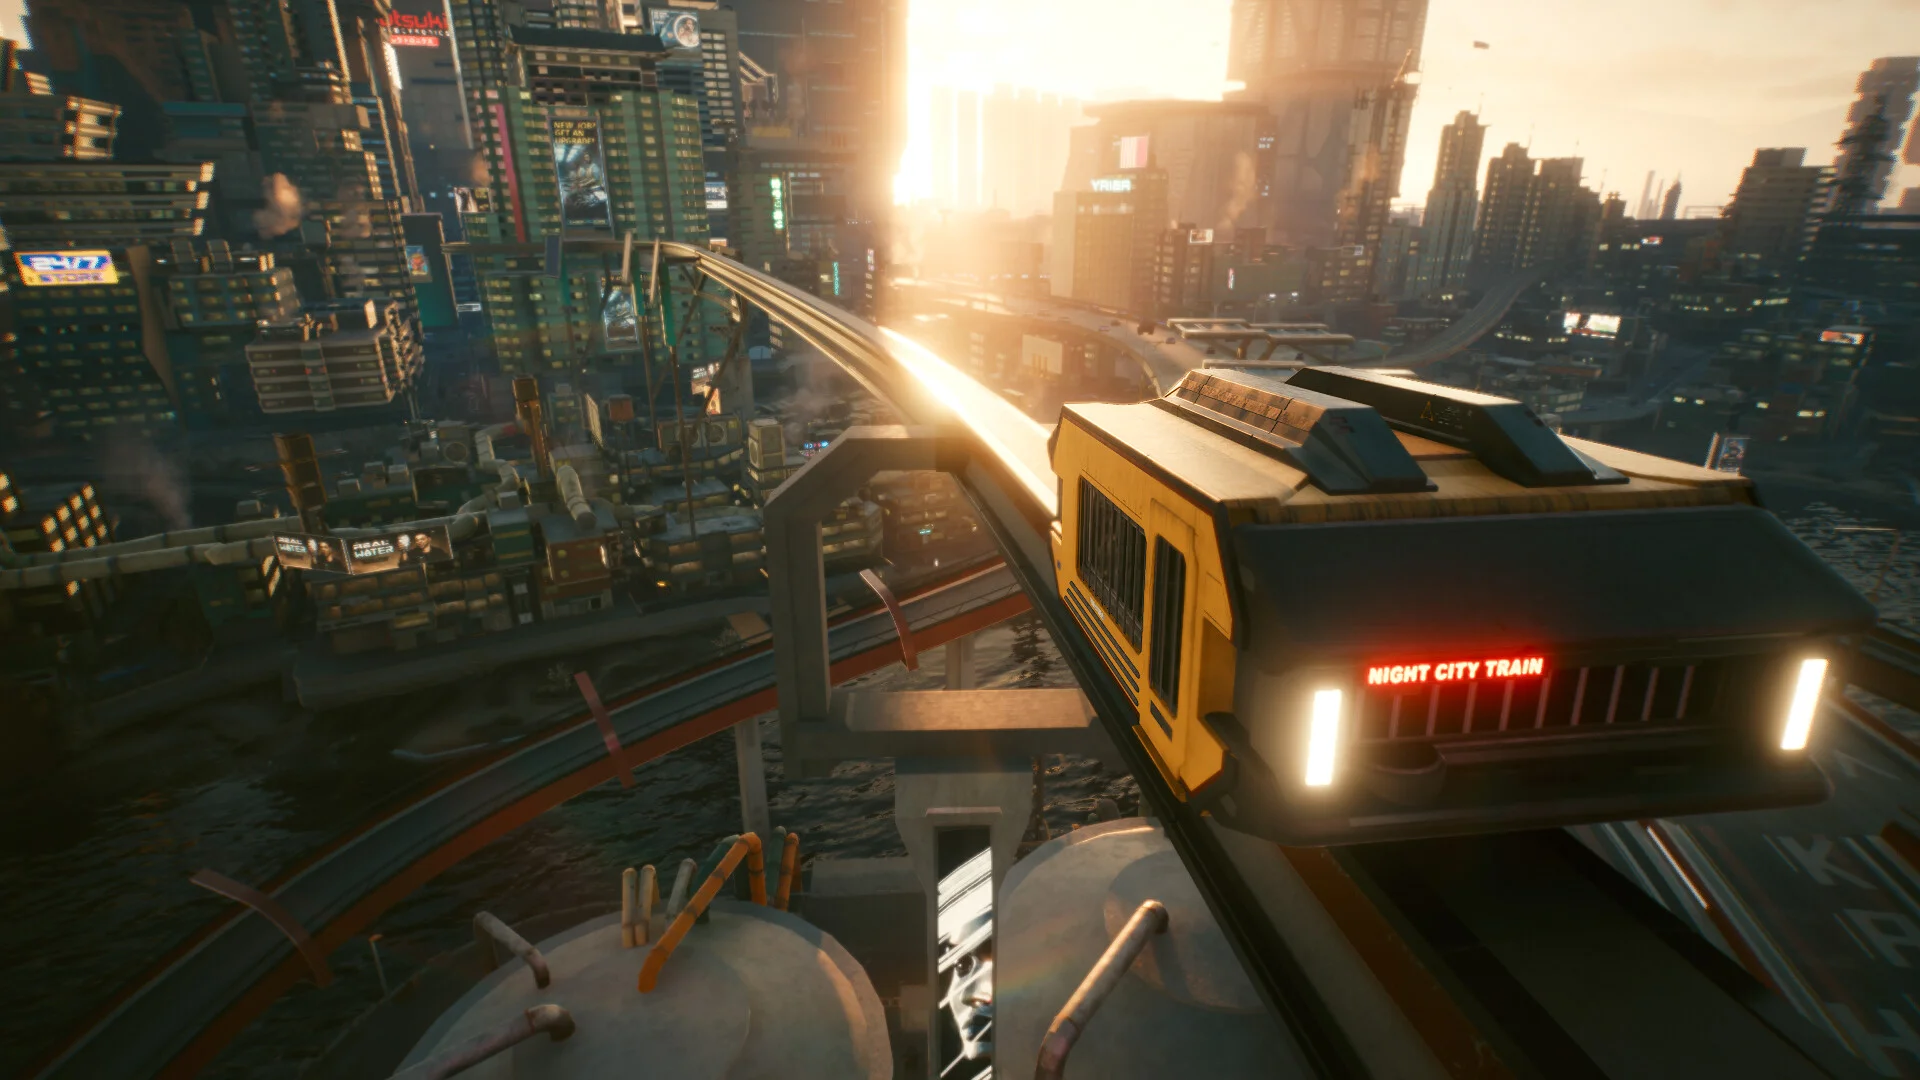 Мод для Cyberpunk 2077 добавил в игру 19 функционирующих станций метро - фото 1